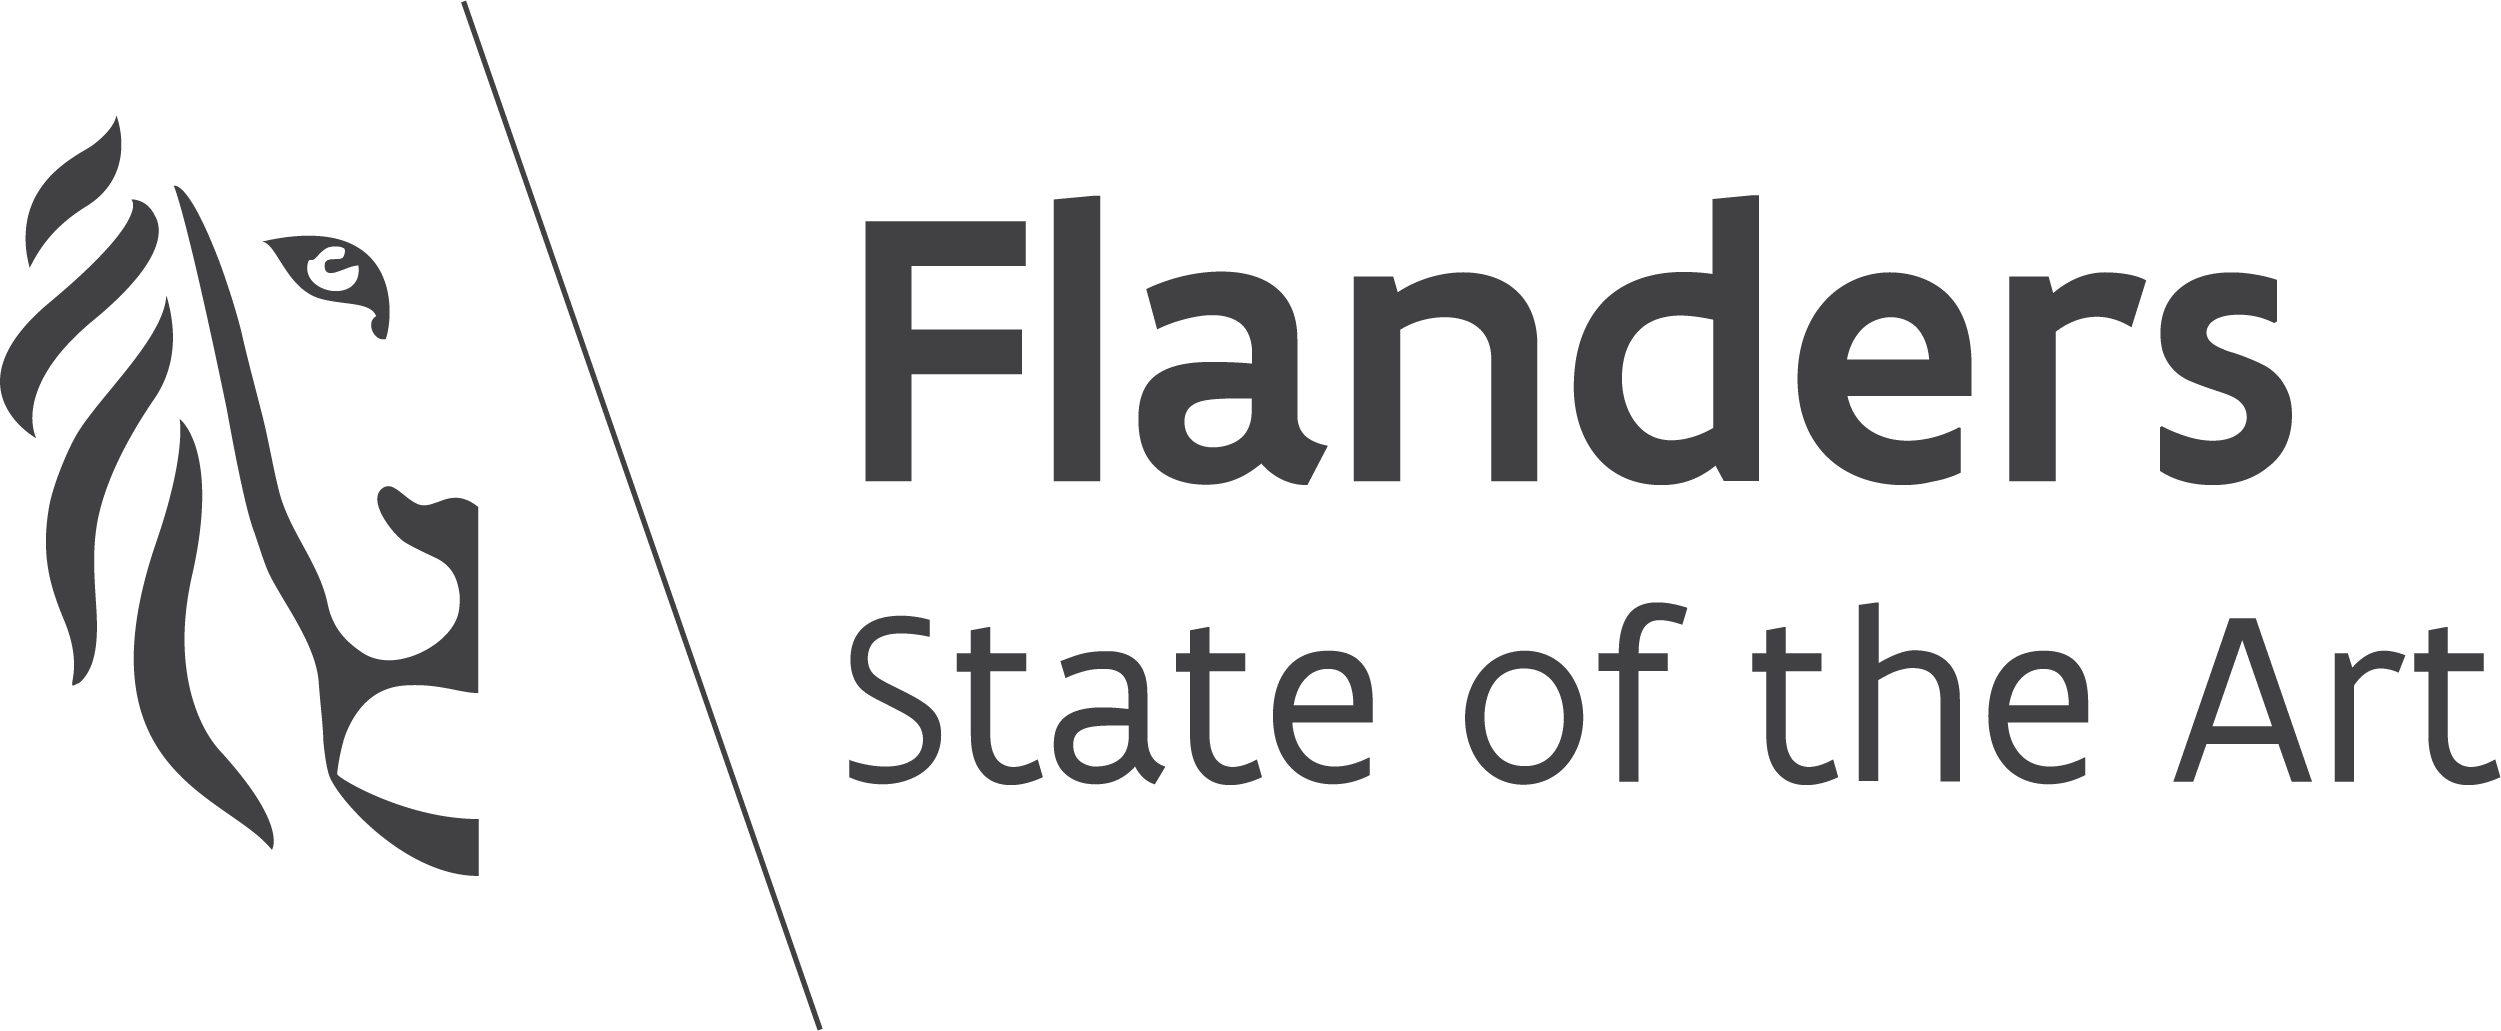 Flemish Government logo